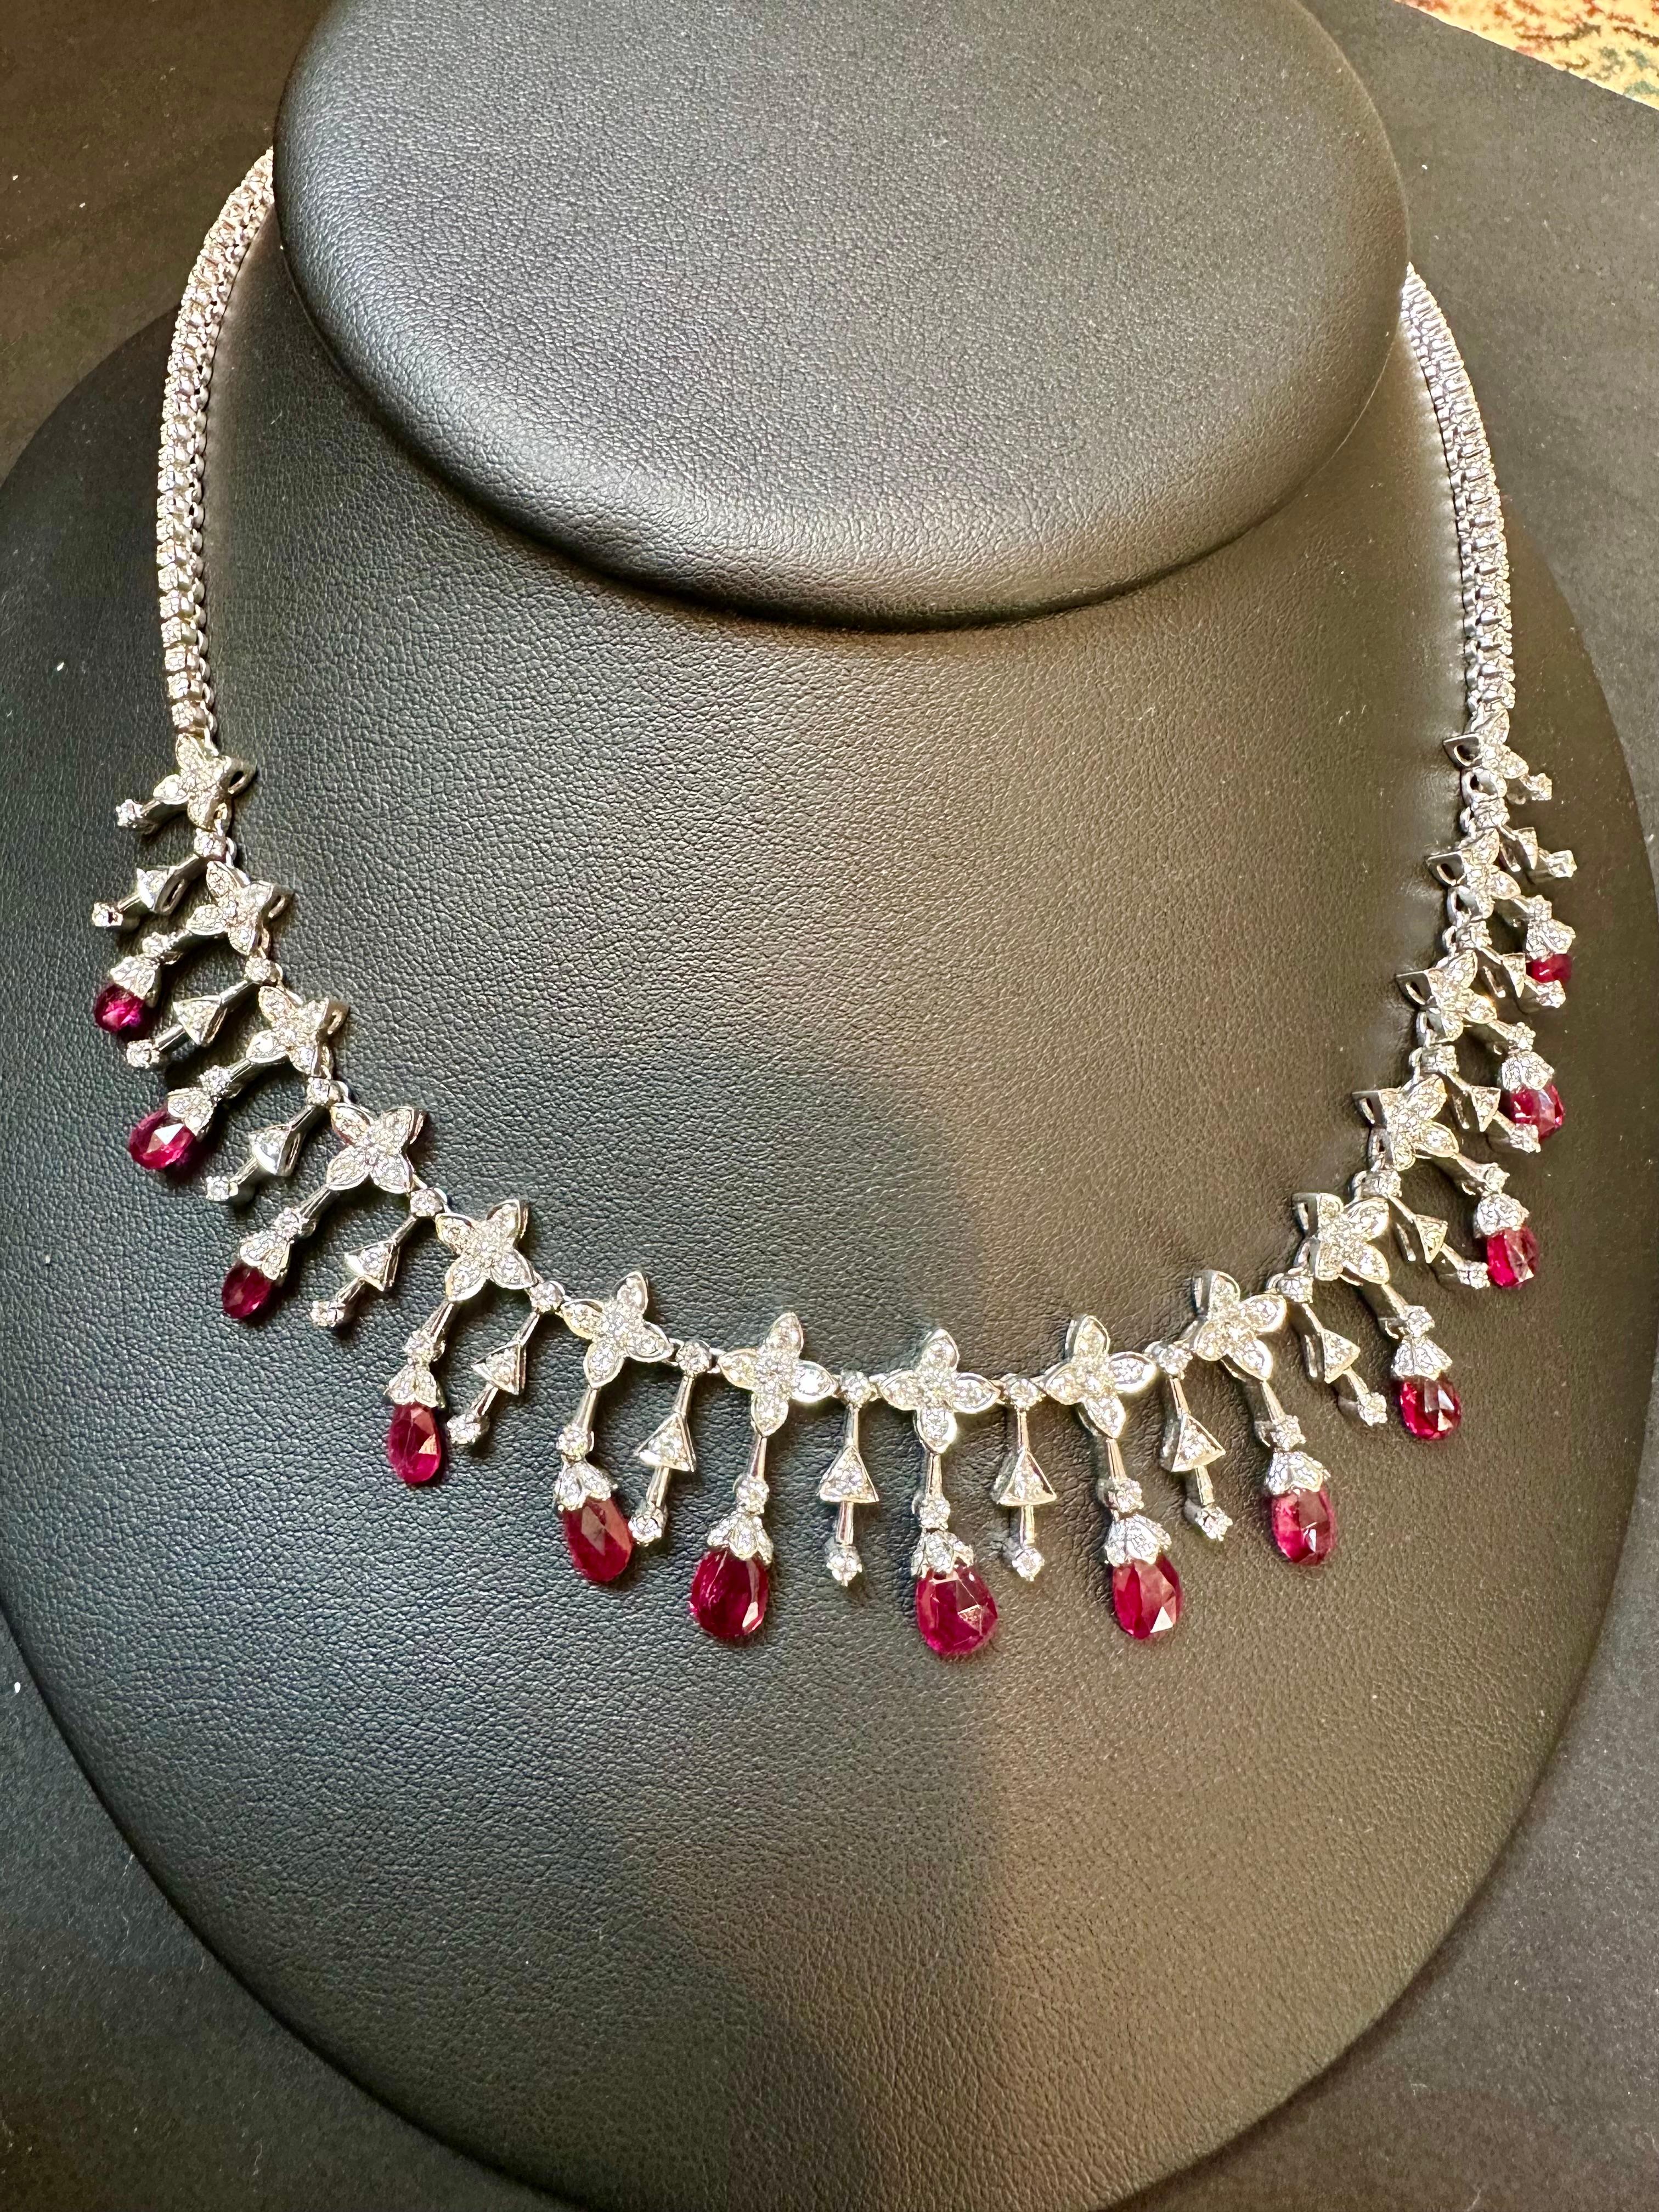 18 Ct Natural Ruby Briolette & 8 Ct Diamond Necklace 18 Karat White Gold, Estate For Sale 8